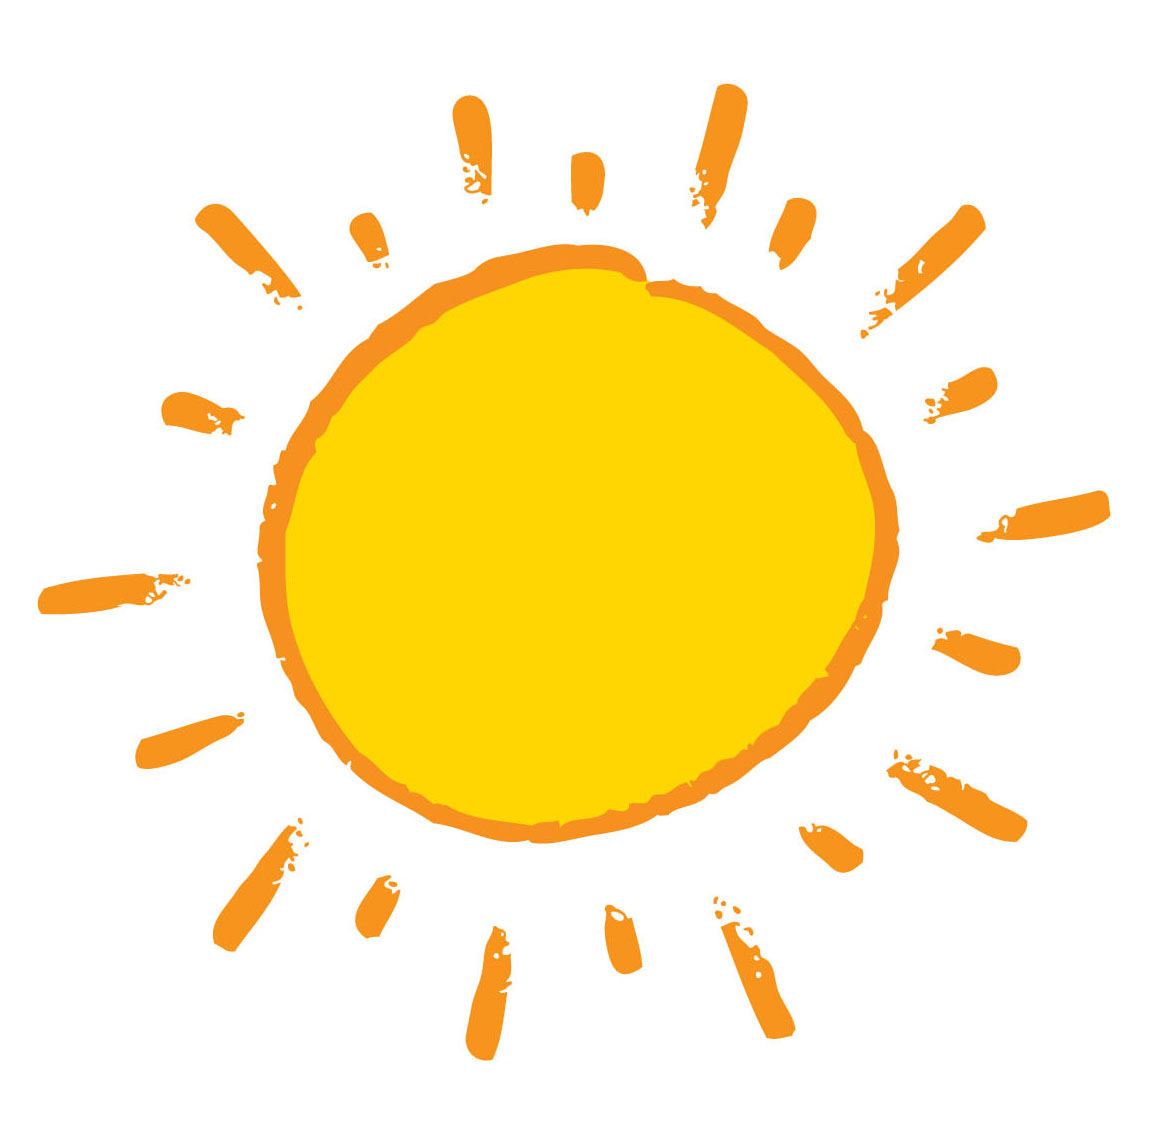 Medium Plain Sun Drawing Image PNG Transparent Background, Free Download